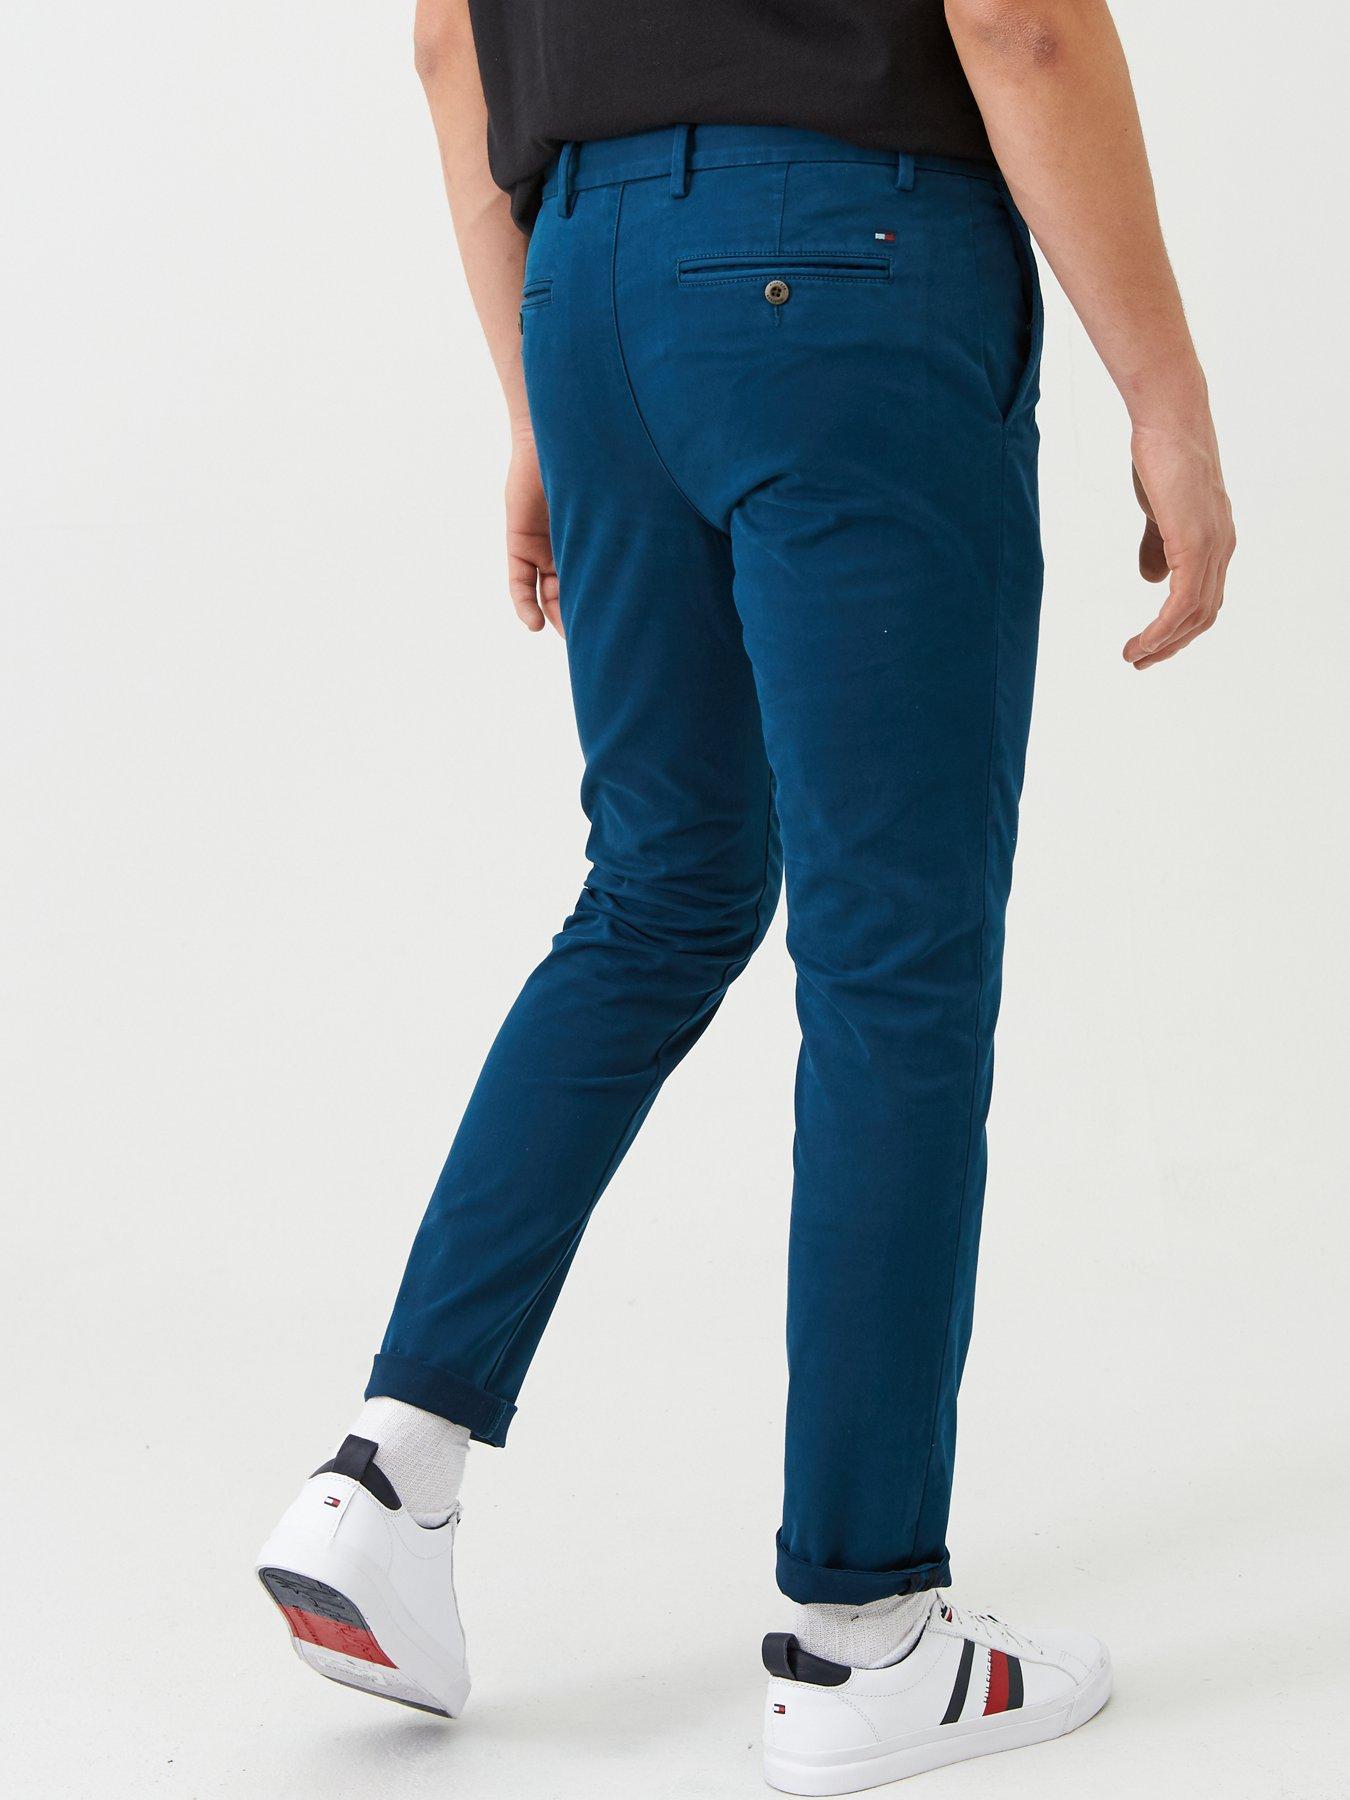 bleecker th flex slim fit jeans